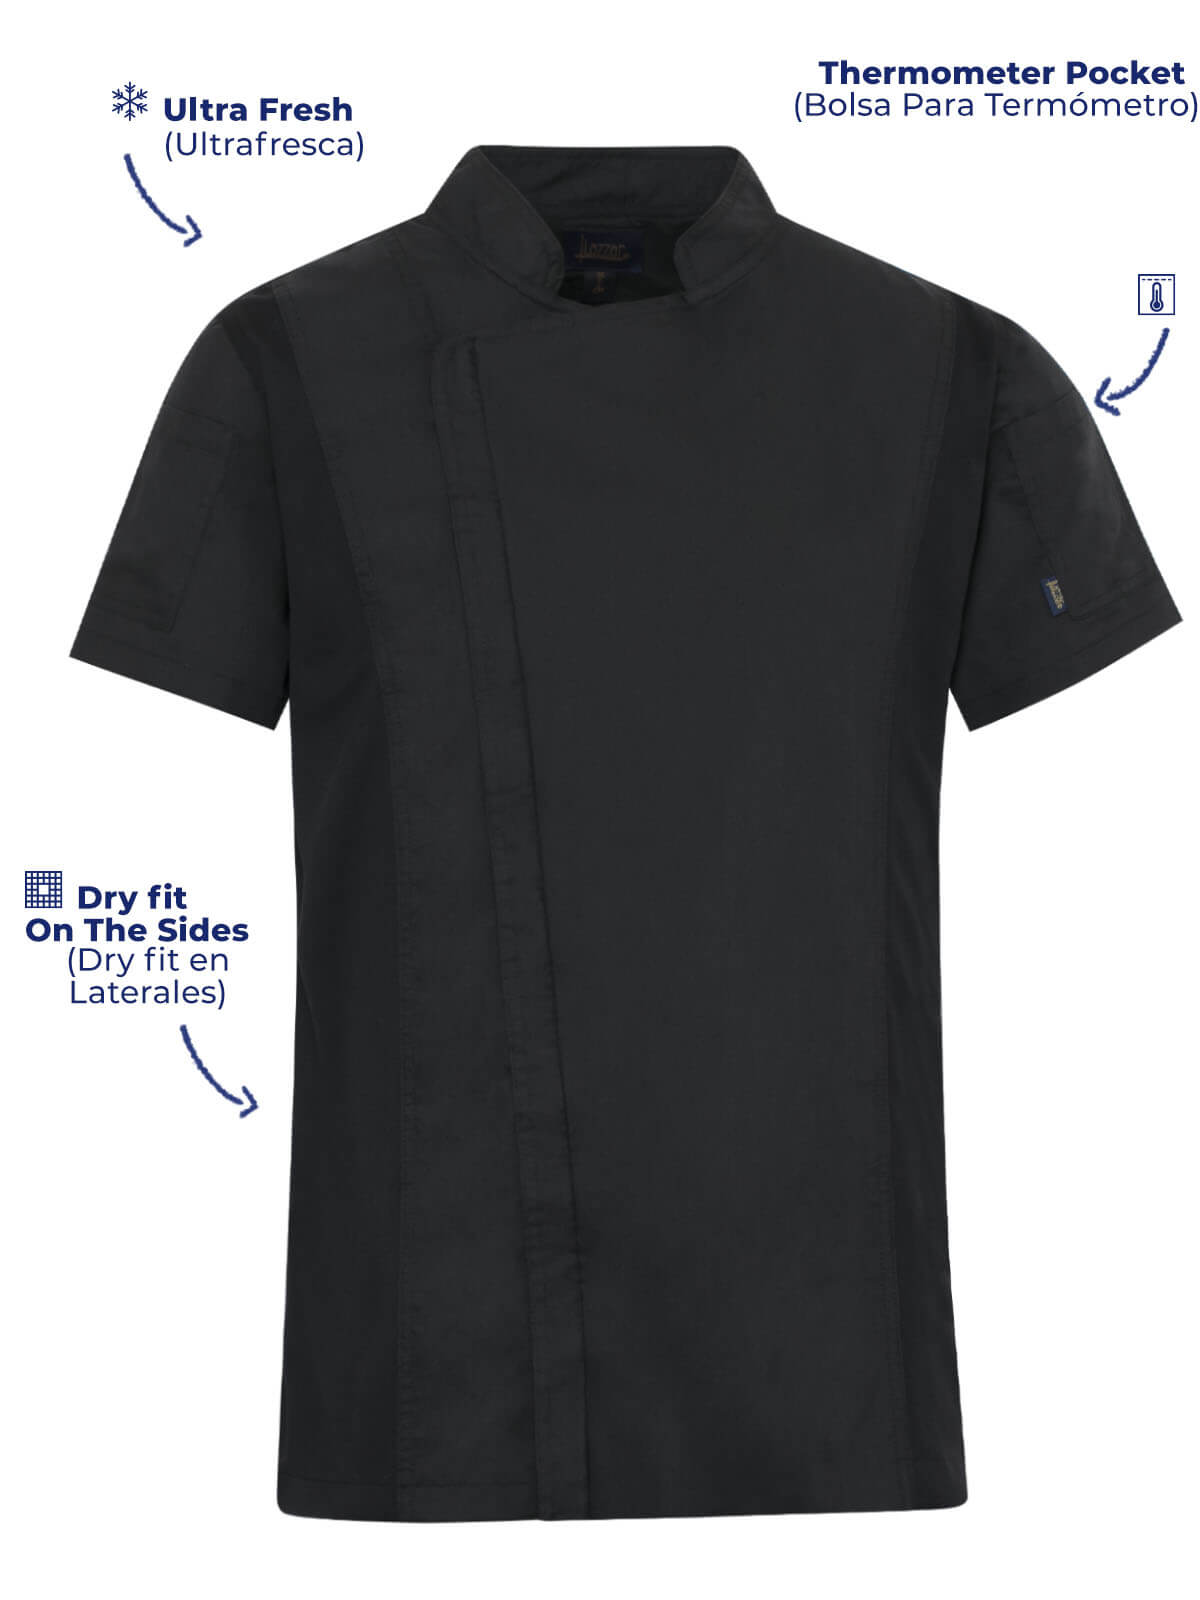 entilated Chef Jacket black color